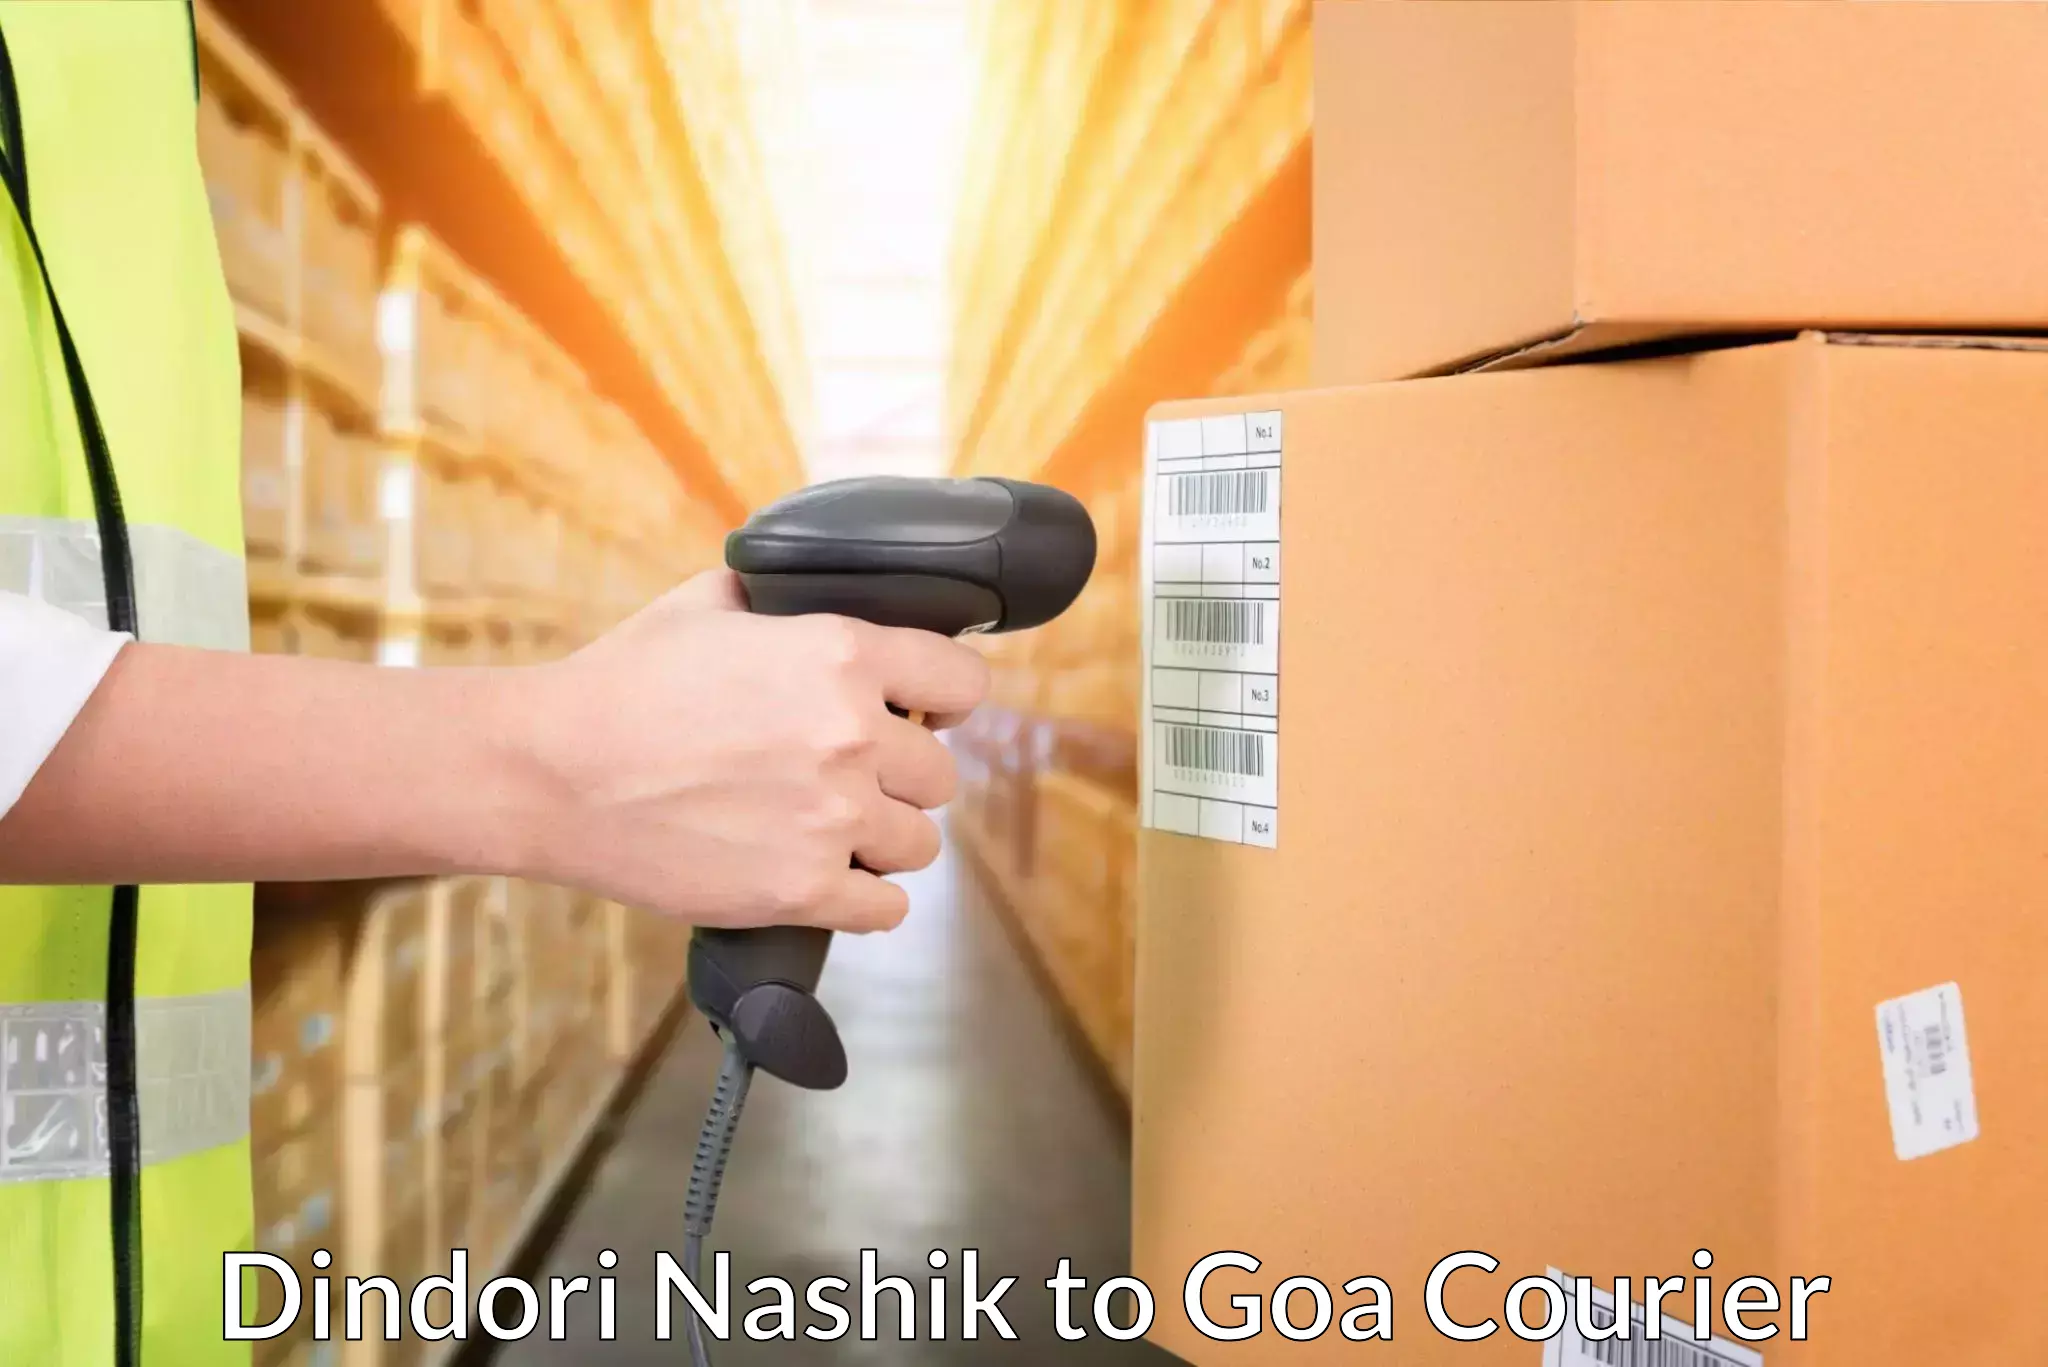 Express delivery network Dindori Nashik to Ponda